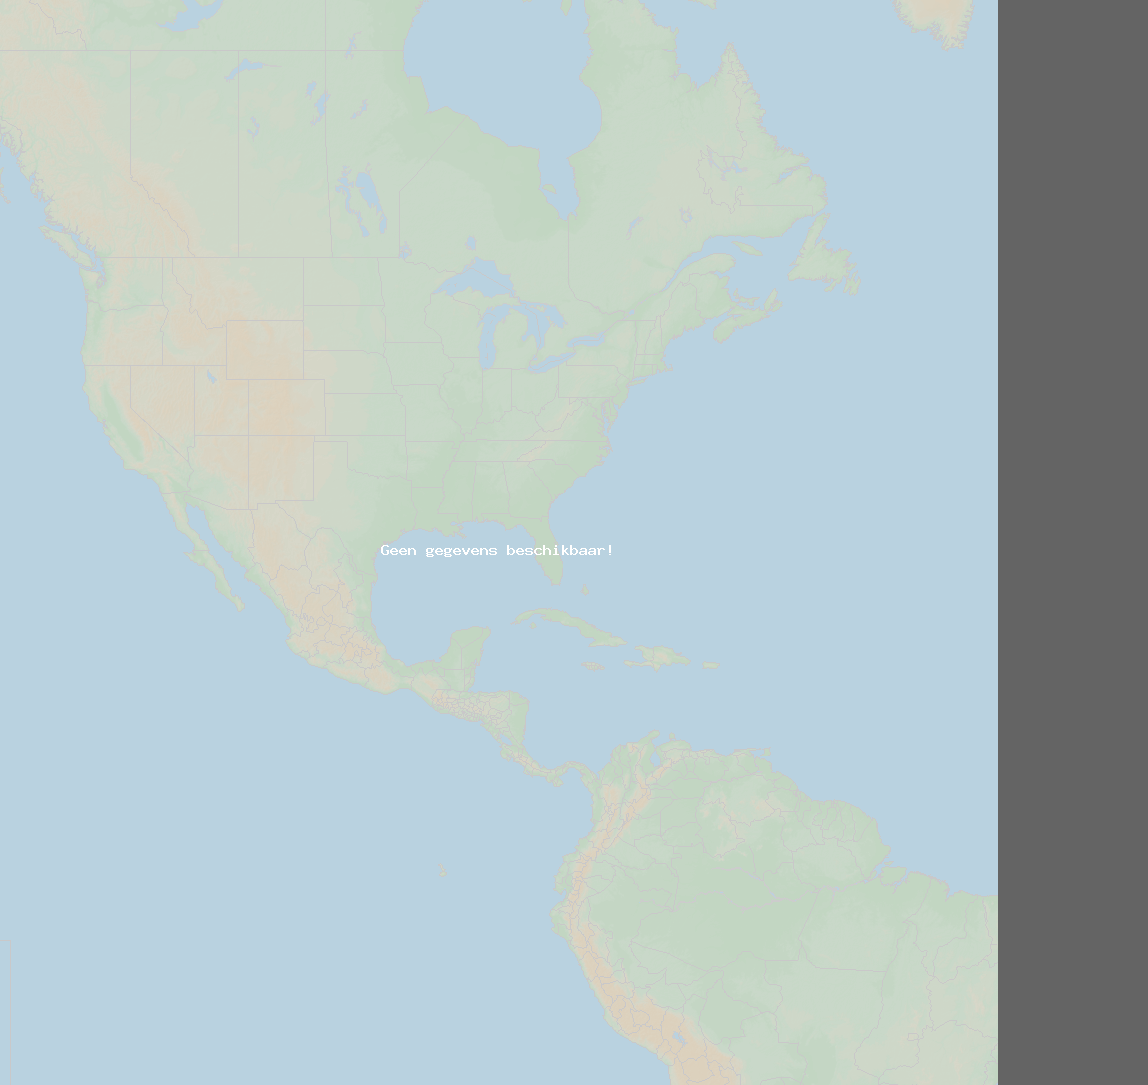 Inslagverhouding (Station Spearfish) North America 2022 